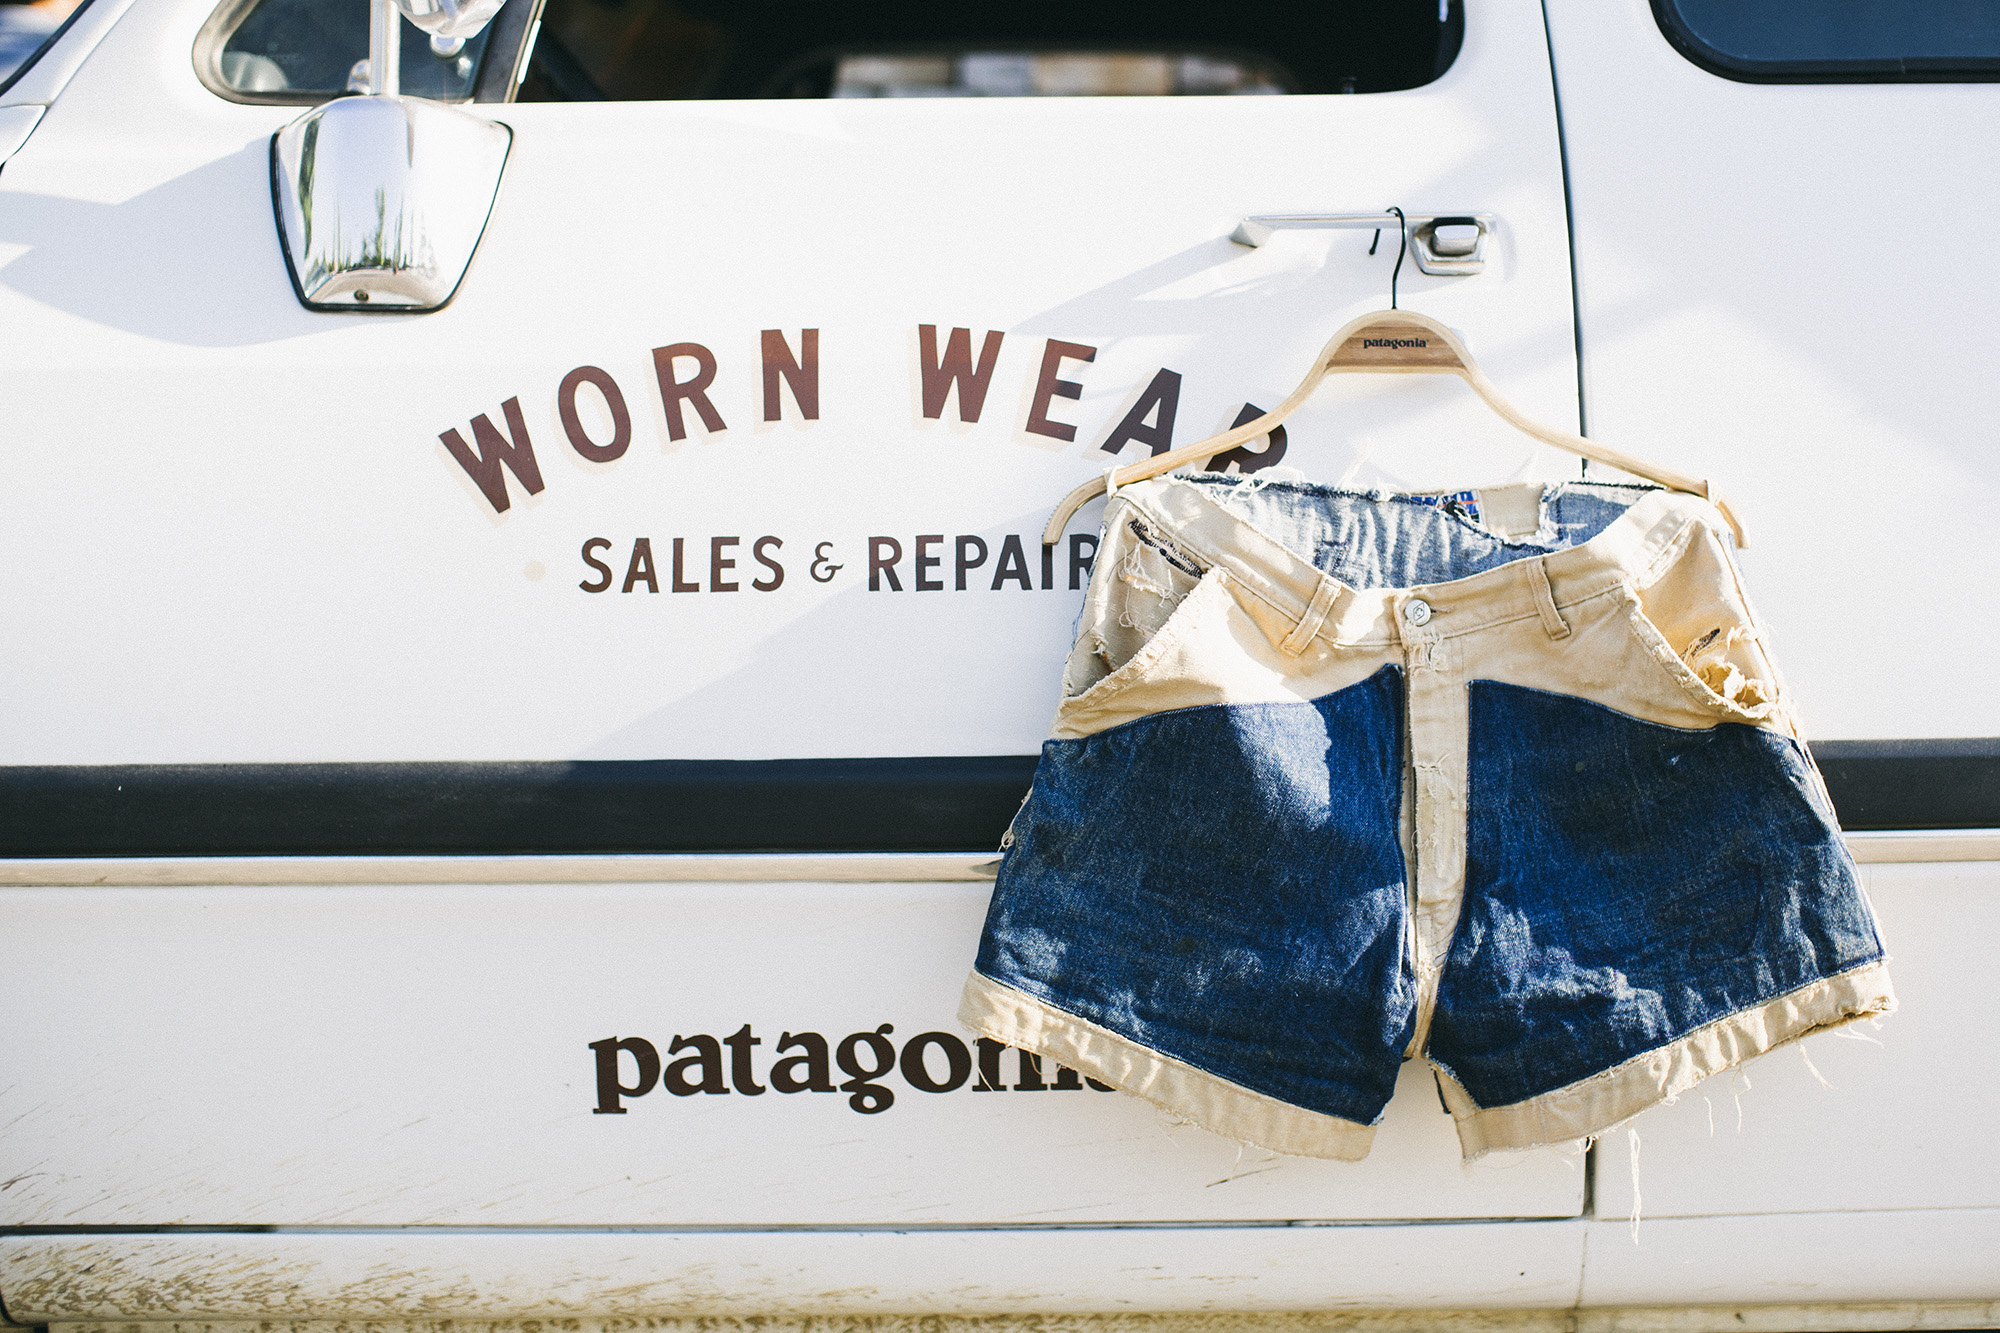 Used Patagonia® Clothing & Gear  Worn Wear – Patagonia Worn Wear